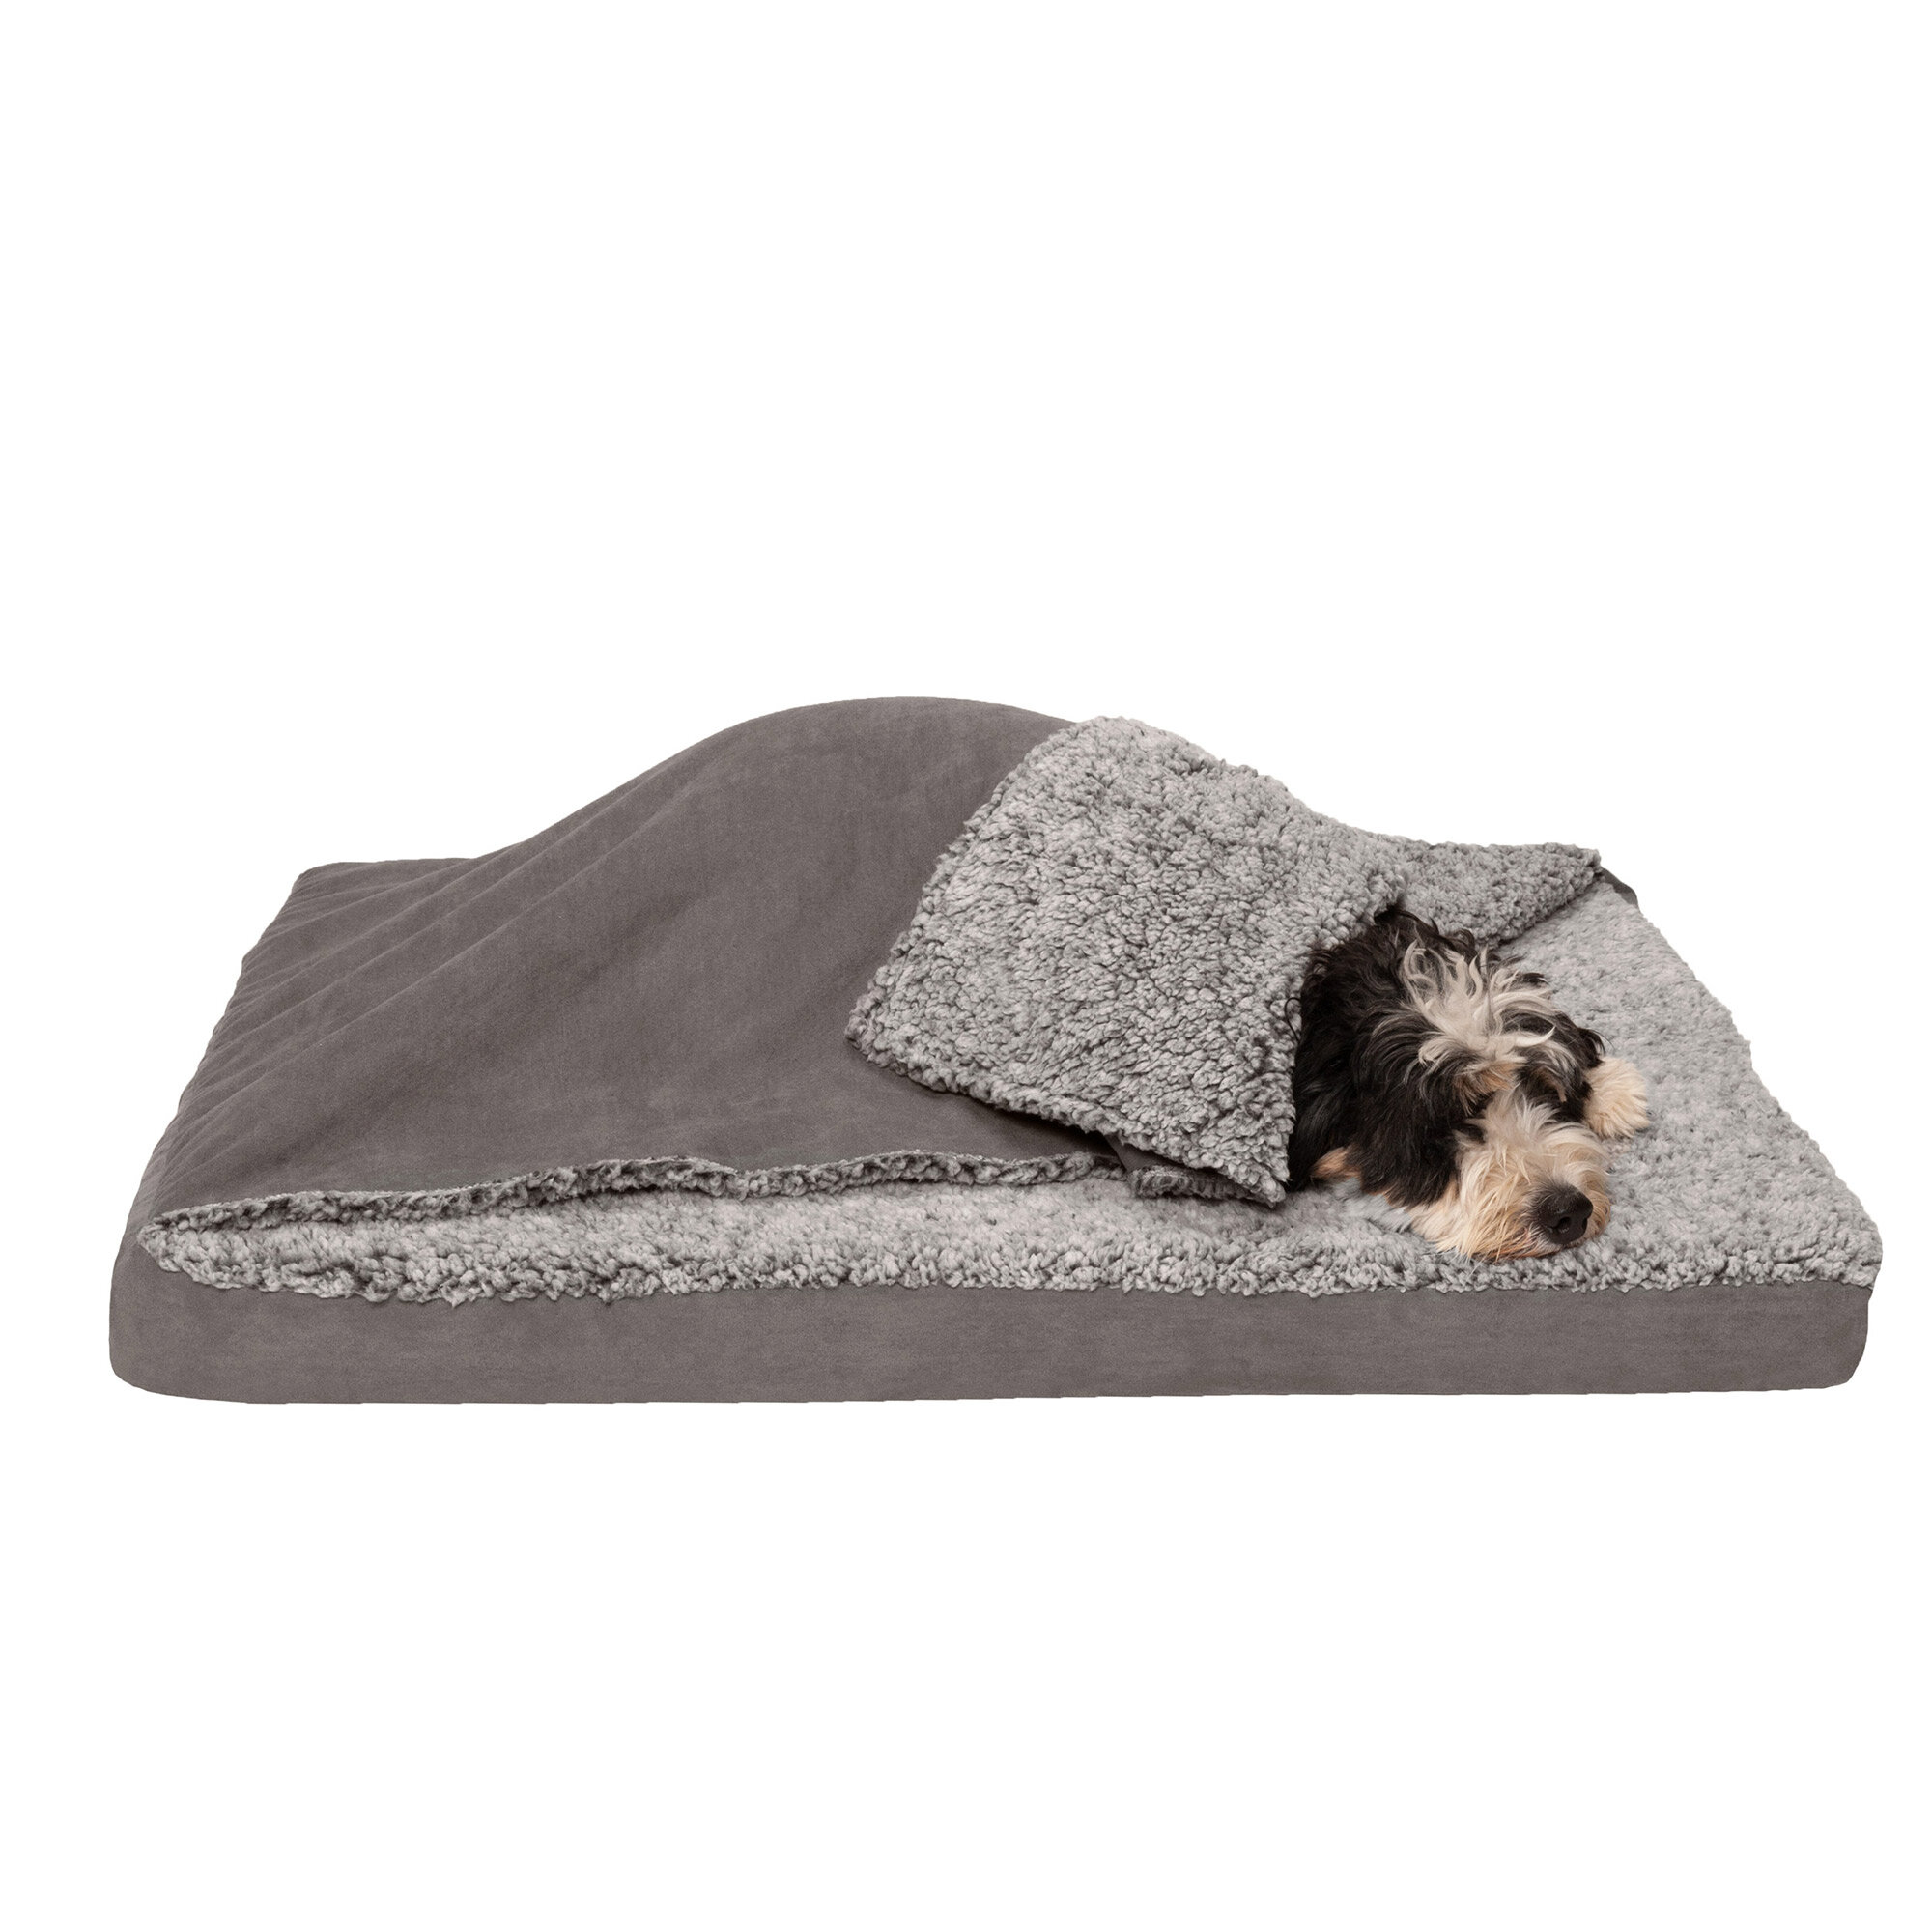 why do dogs like heated blankets